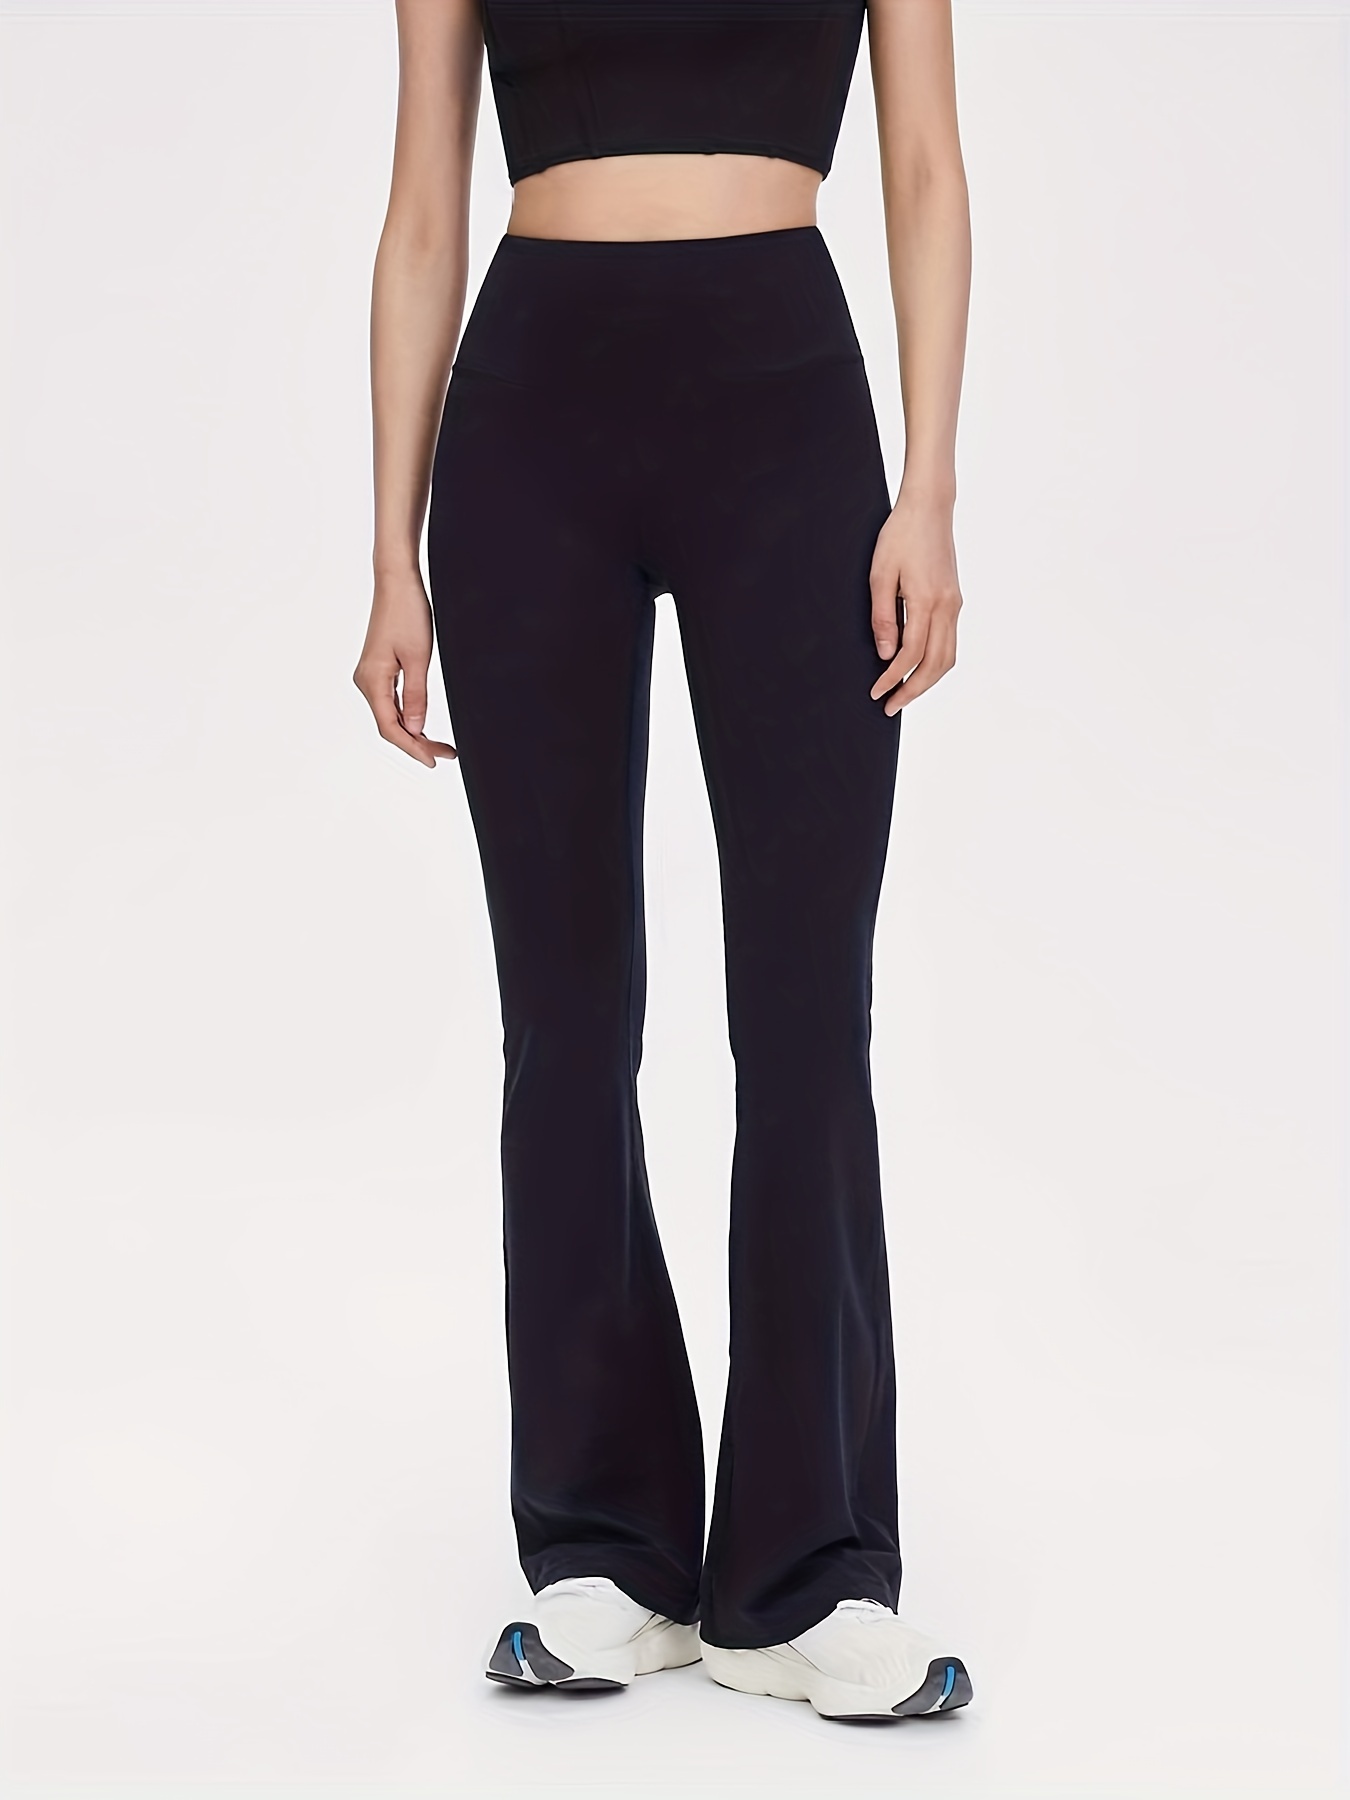 XFLWAM Women's Flared Yoga Pants Leggings Bootcut Crossover High-Waist  Front Slit Plus Size Workout Pants Black XXL 